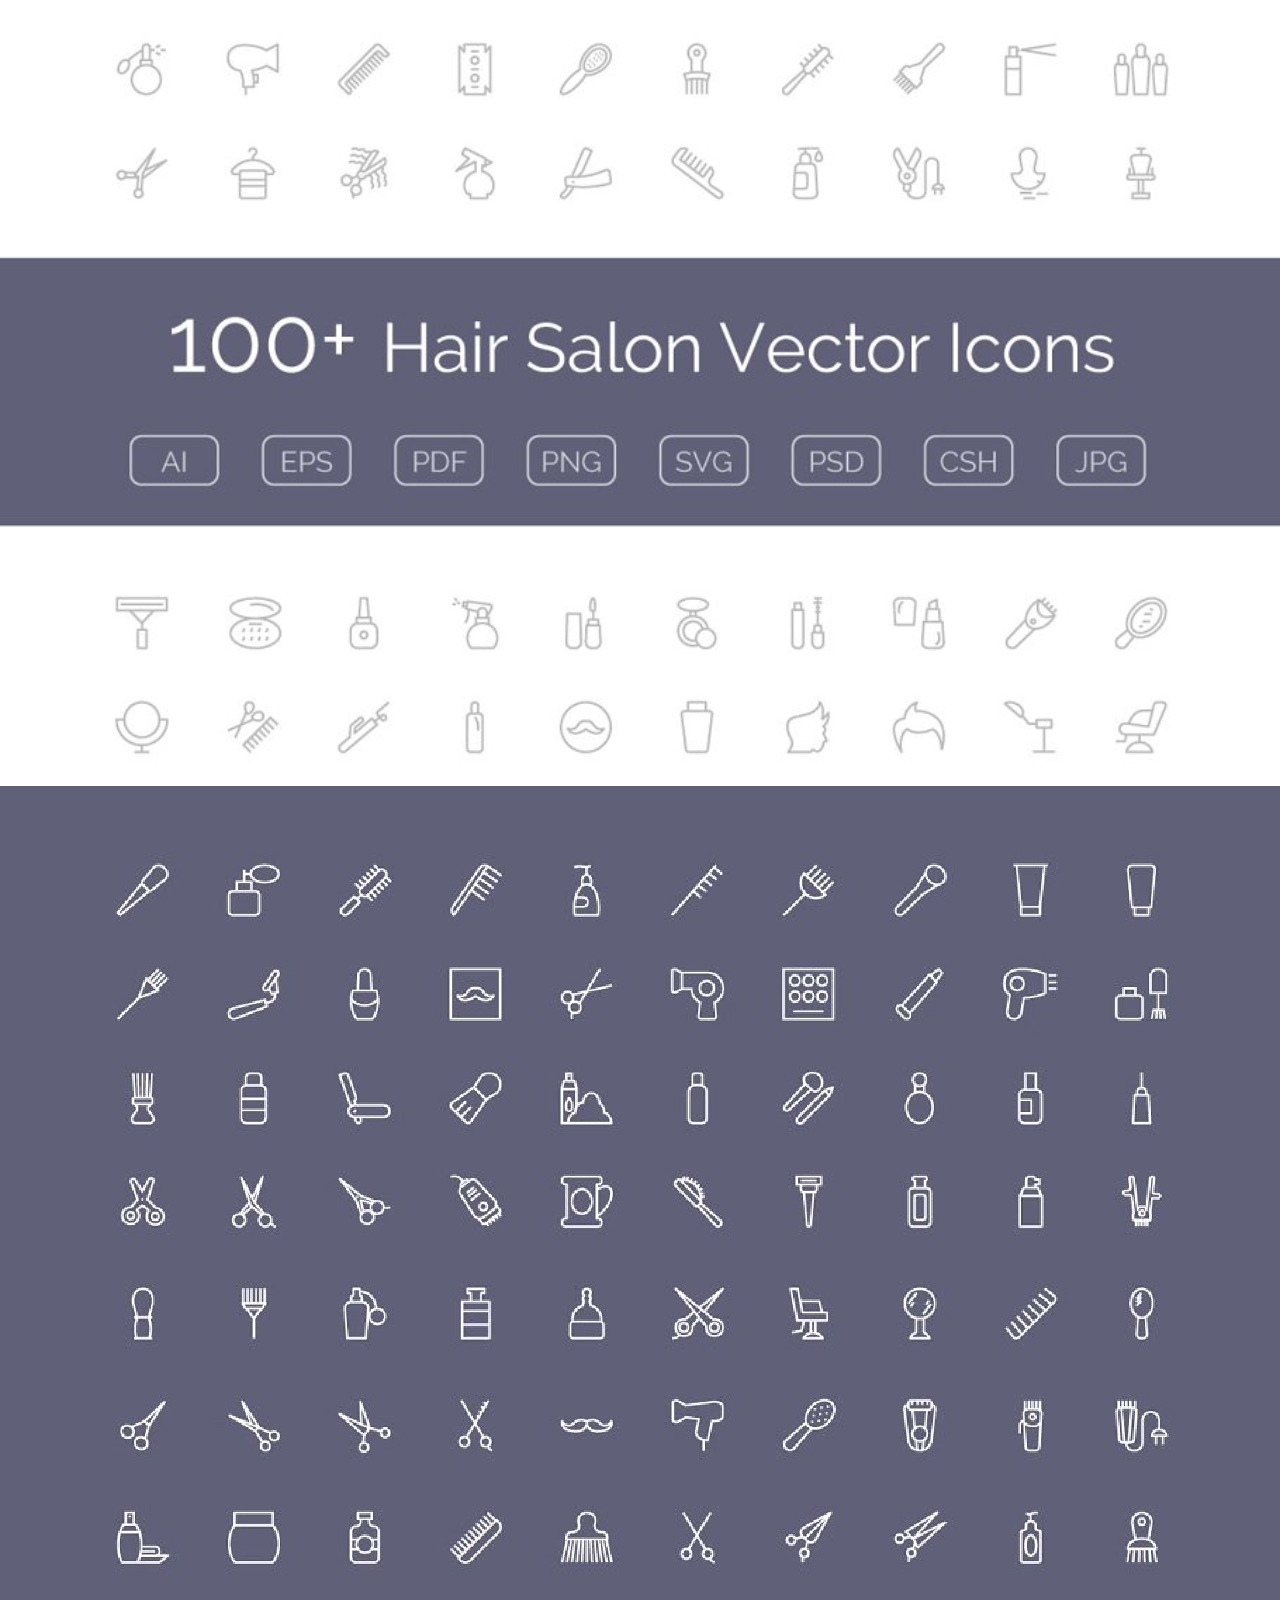 100 hair salon vector icons pinterest image.